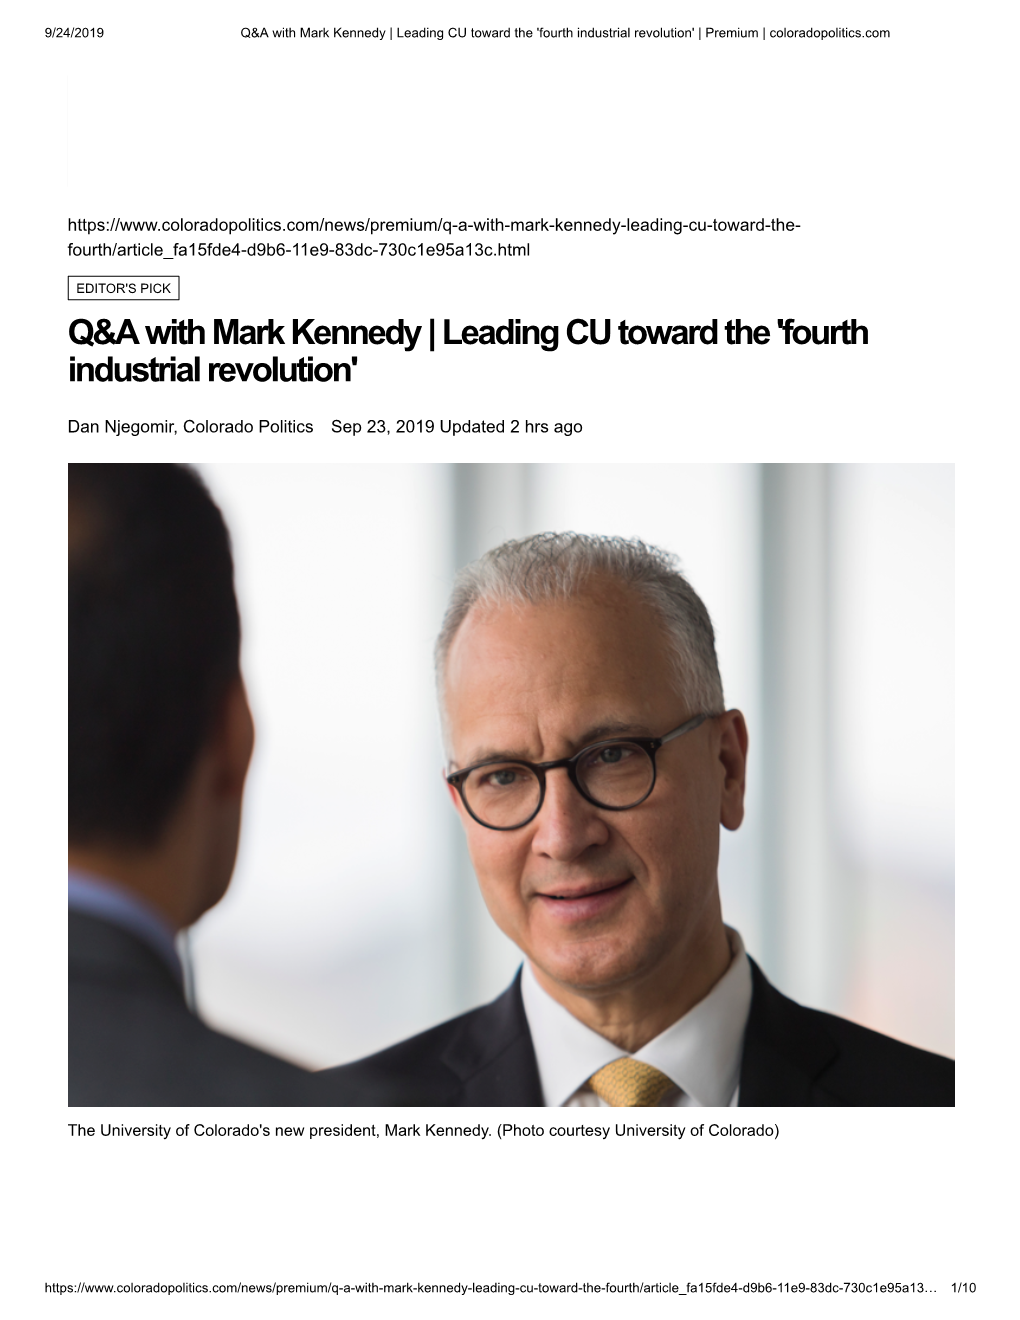 Q&A with Mark Kennedy | Leading CU Toward the 'Fourth Industrial